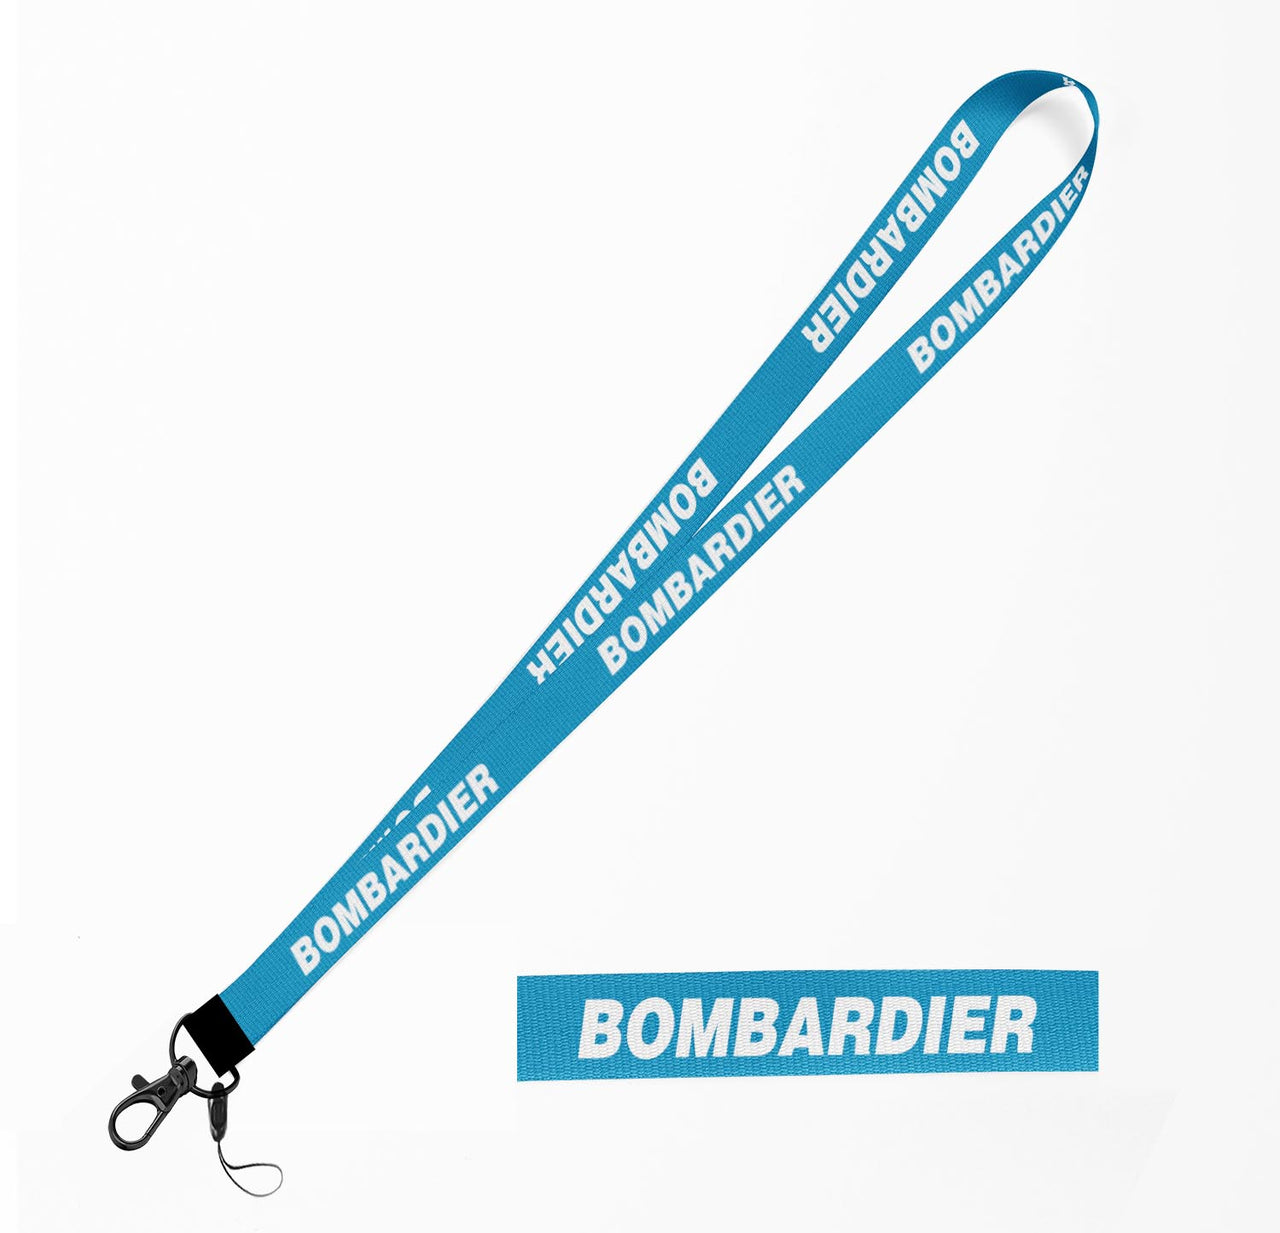 Bombardier & Text Designed Lanyard & ID Holders